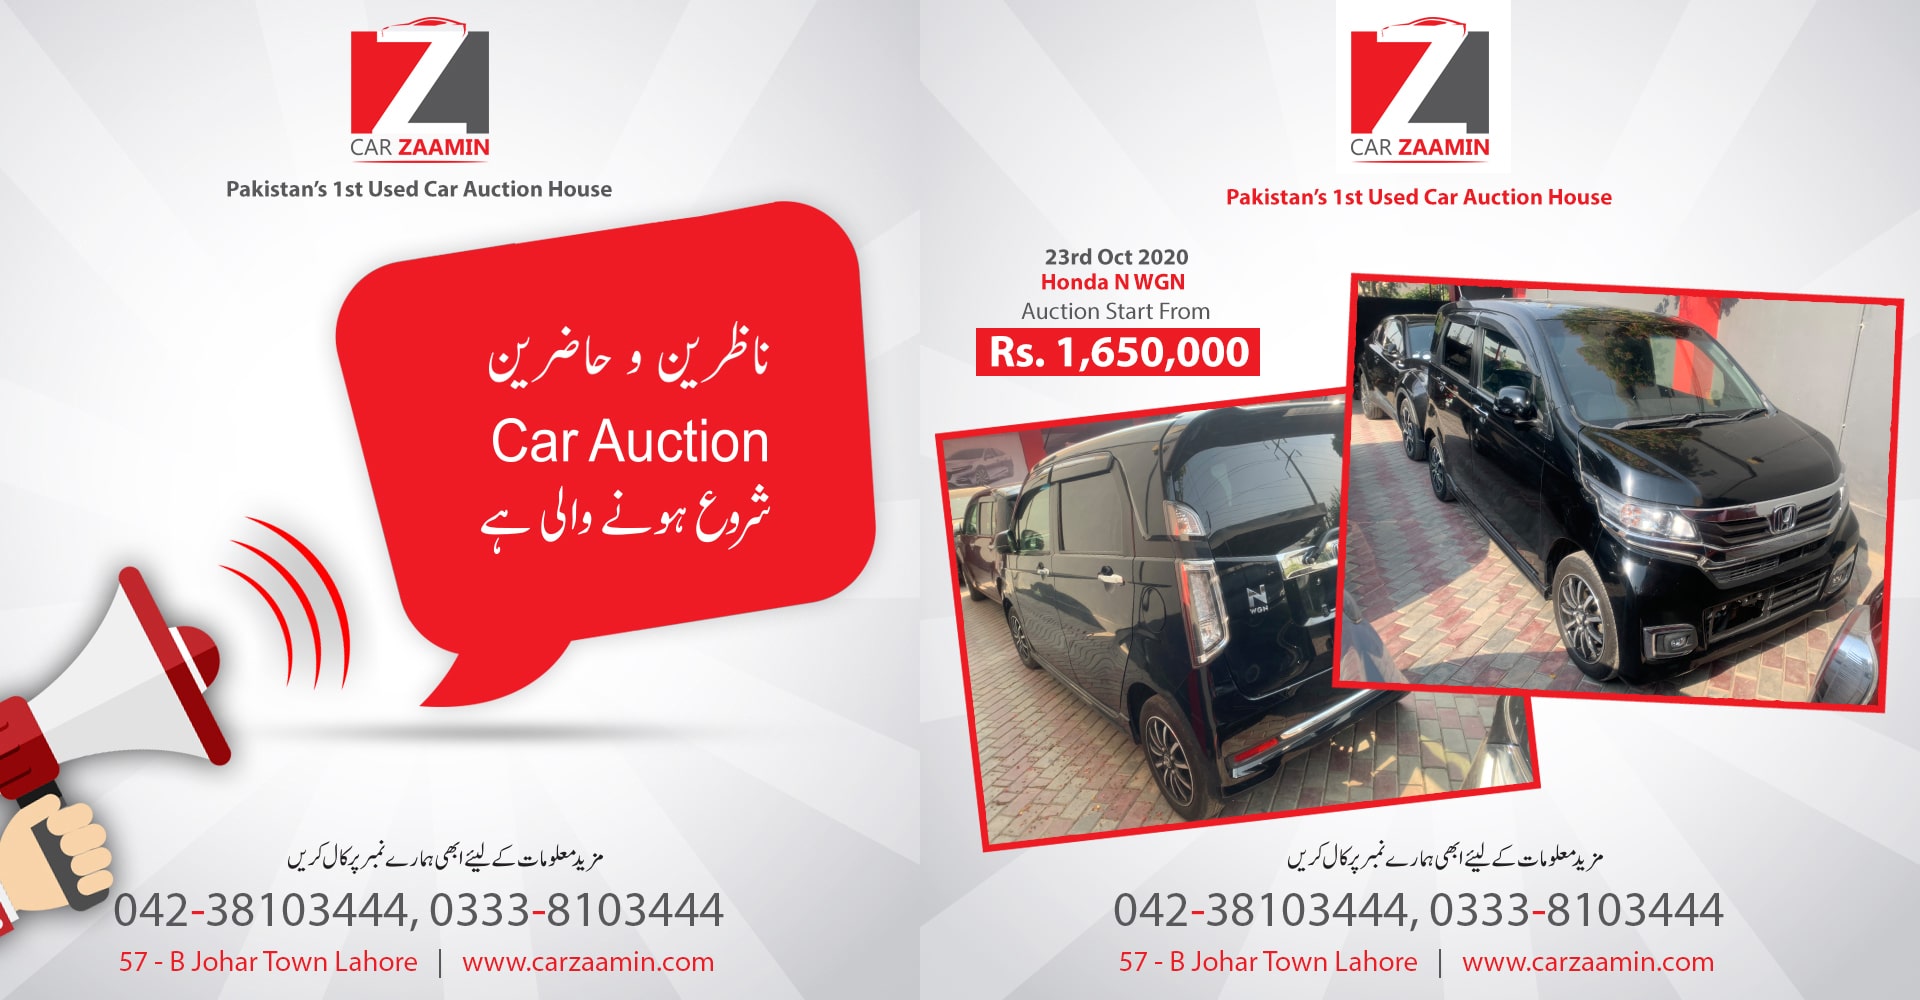 CARZAAMIN Used Cars Aution